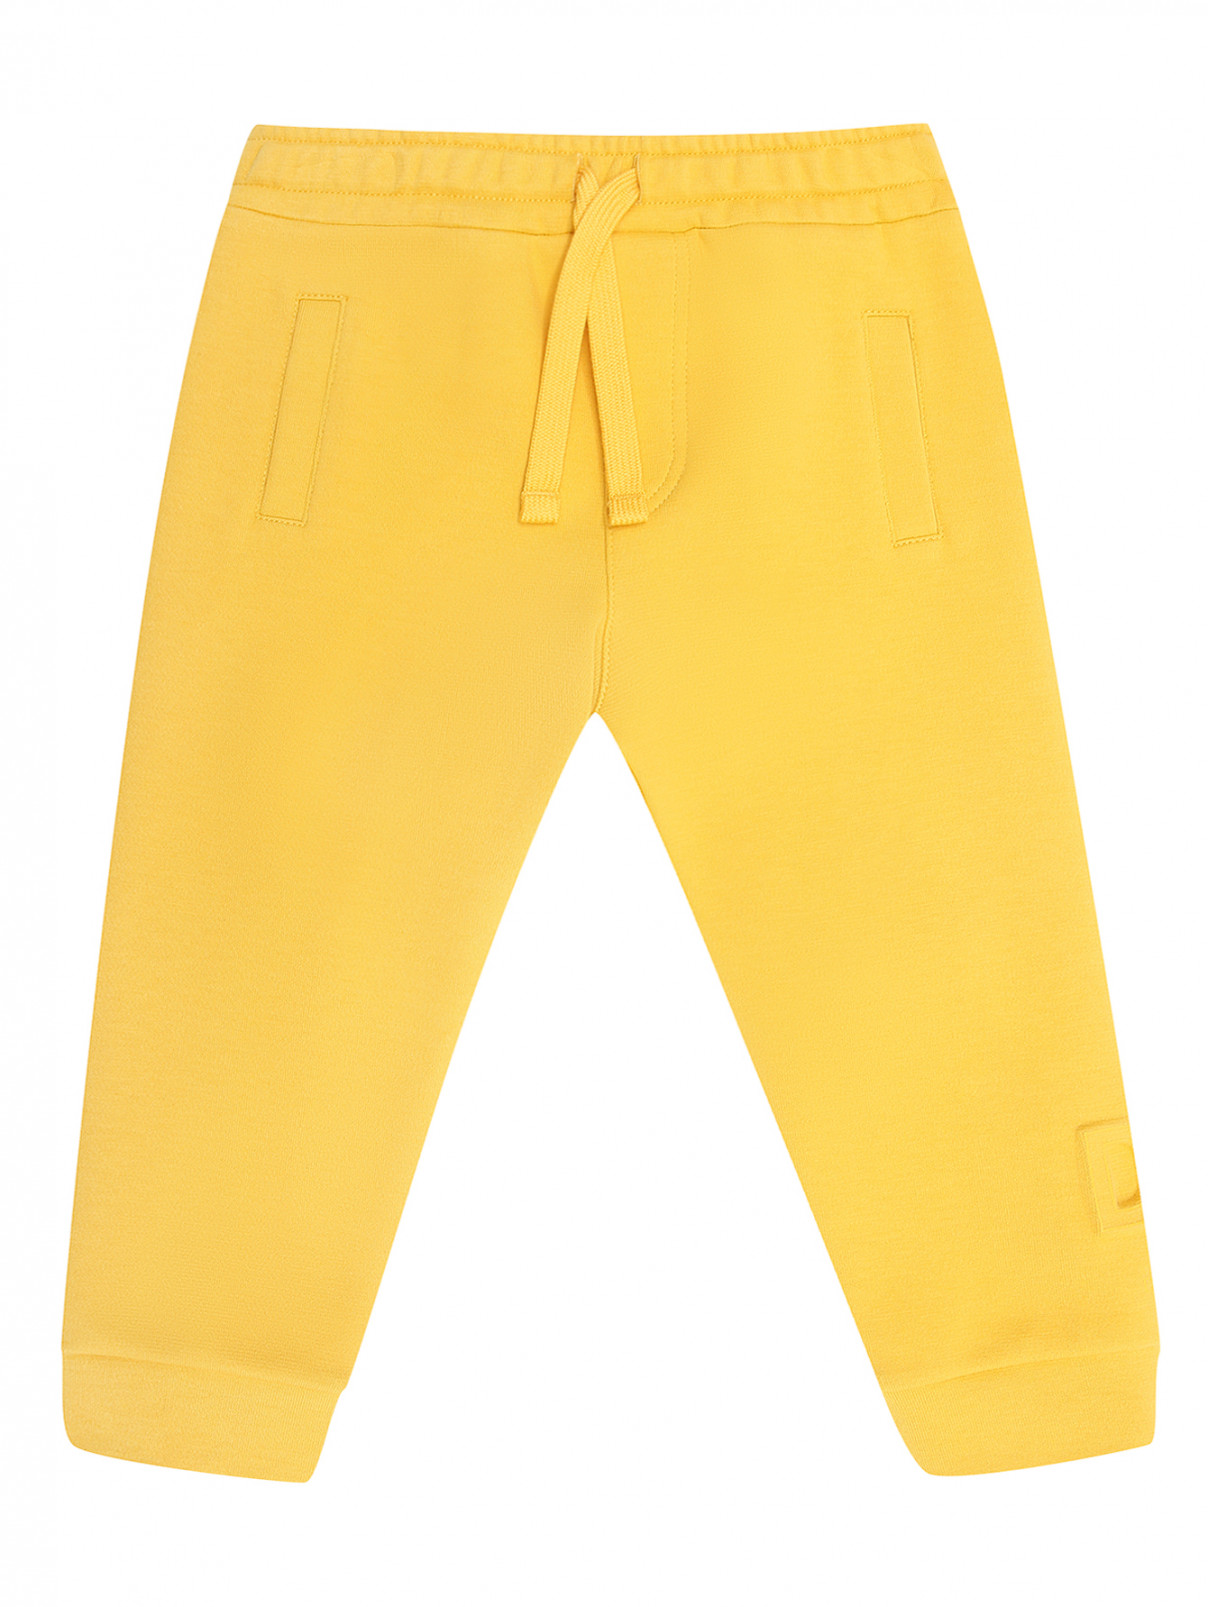 Брюки Dolce & Gabbana  –  Общий вид  – Цвет:  Желтый